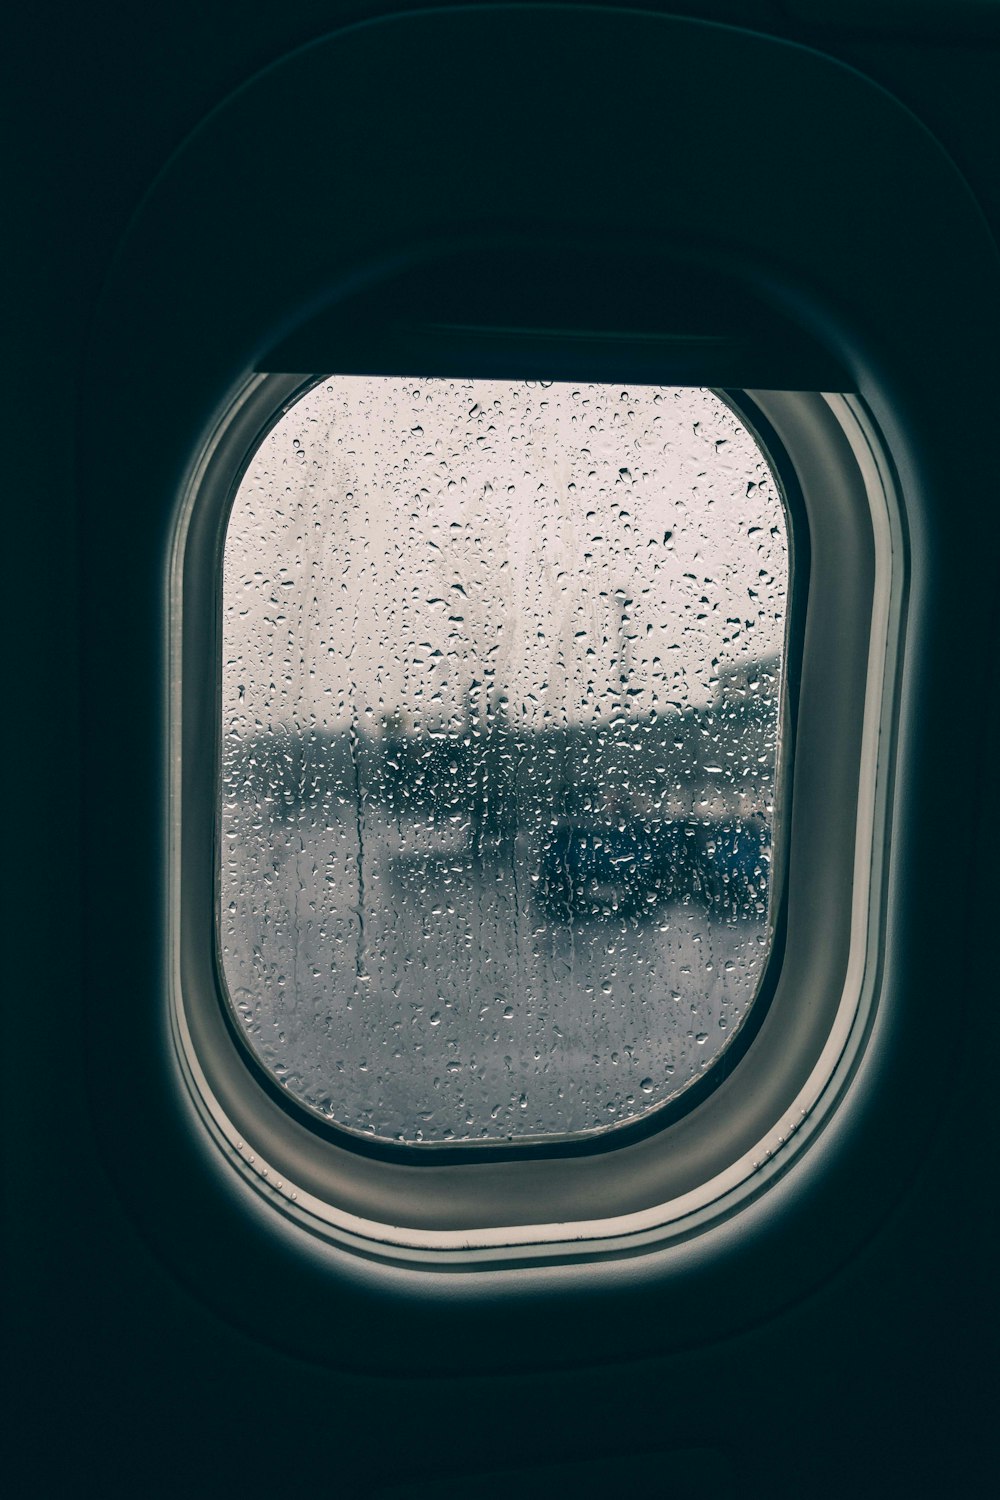 clear glass plane window full of rain droplets